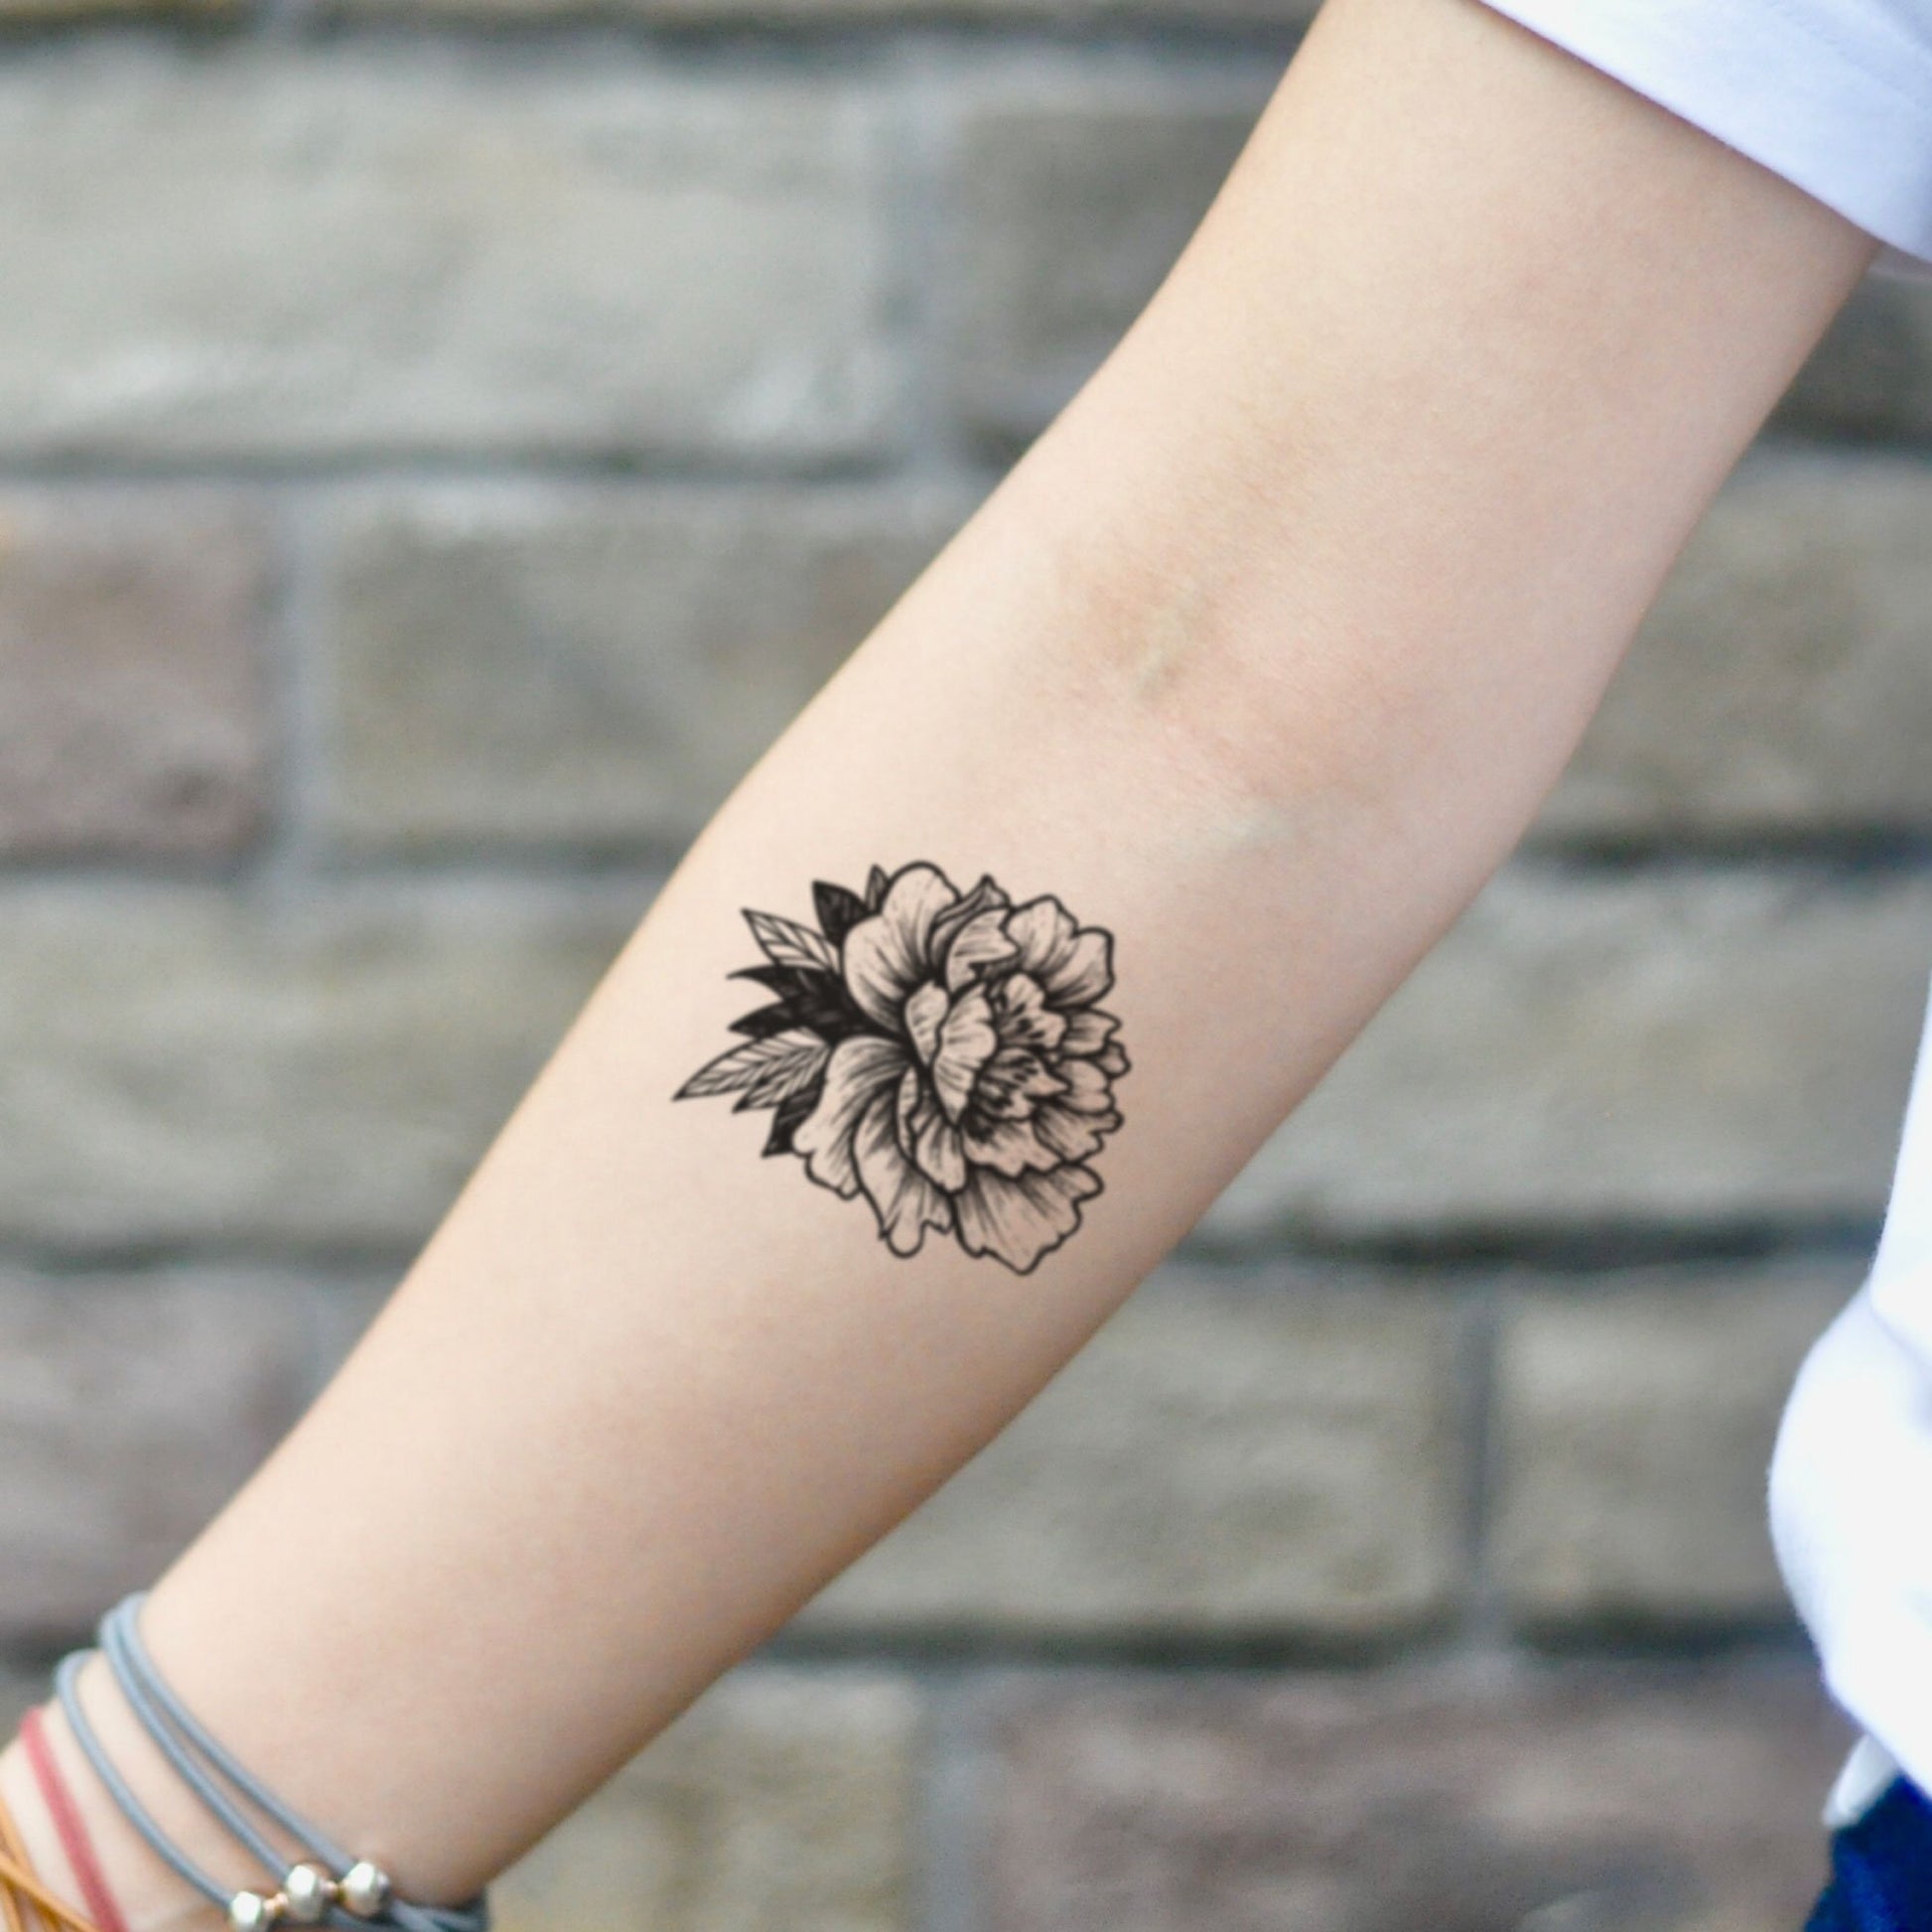 fake small succulent minimalist simple outline flower temporary tattoo sticker design idea on inner arm